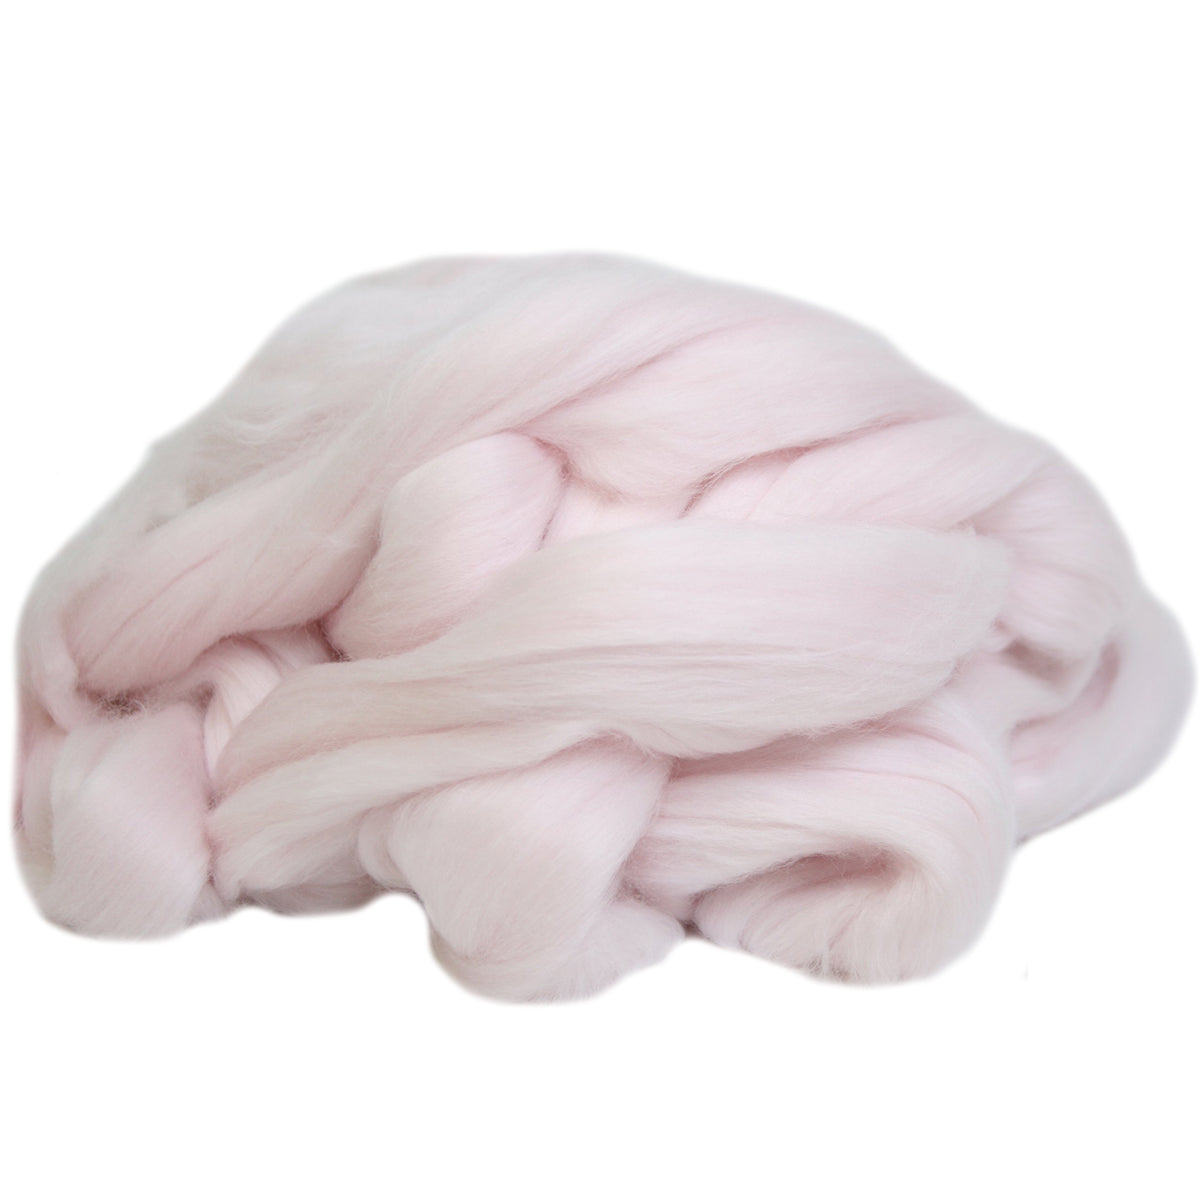 Merino Wool Top Pink Lace 100g